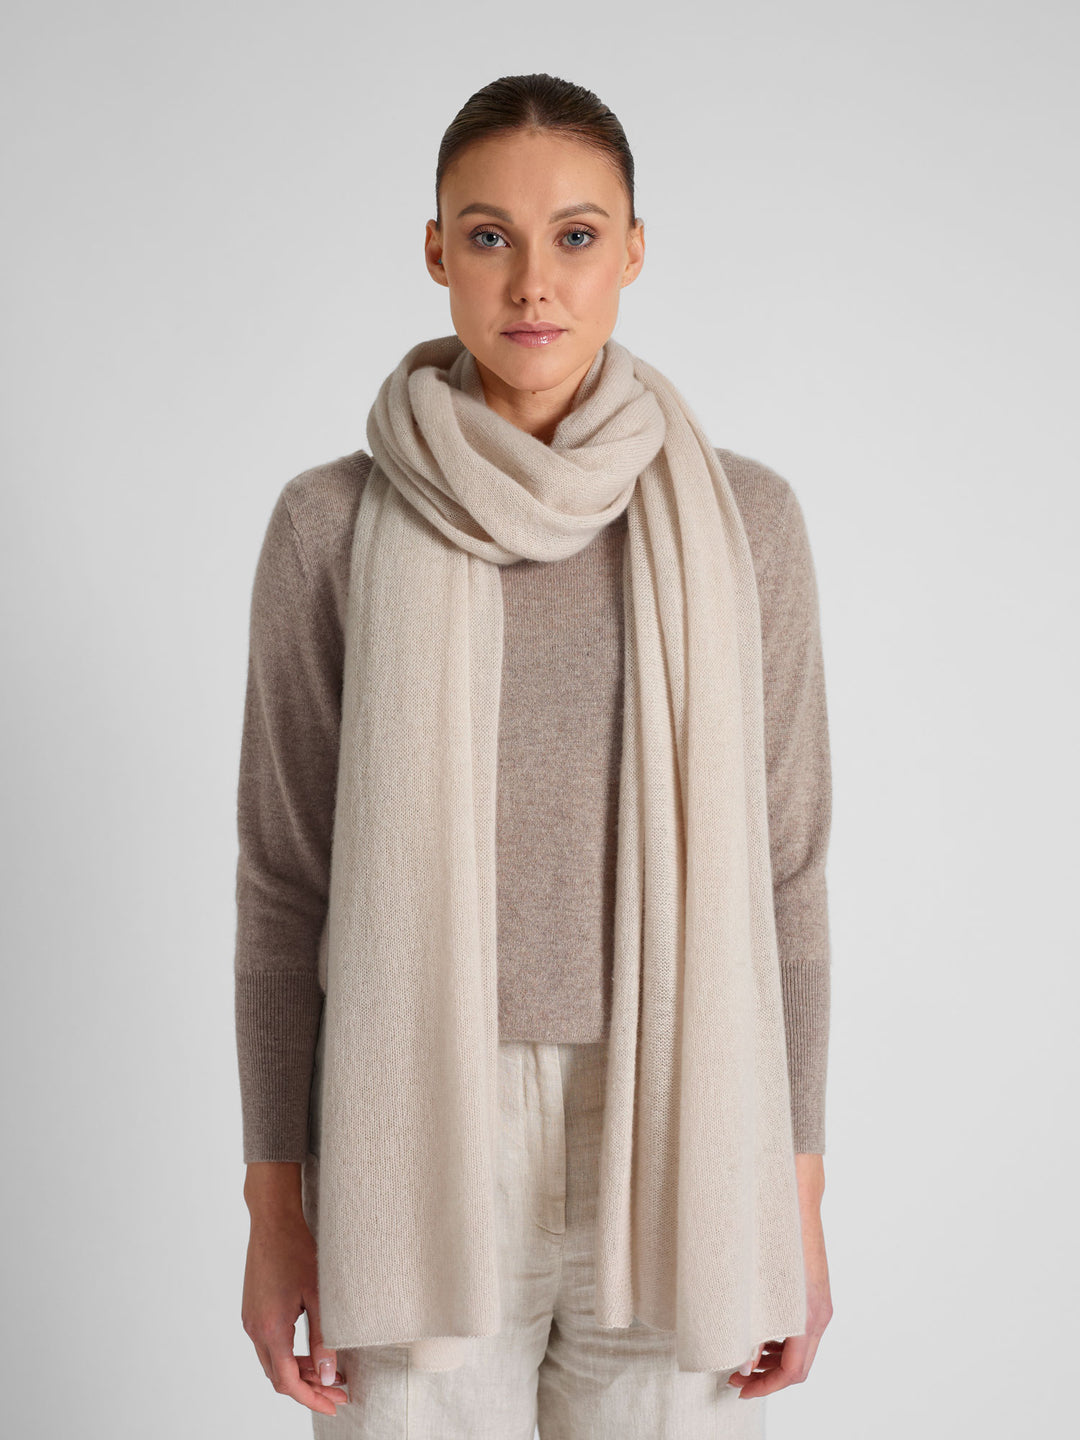 Cashmere scarf "Flow" 100% cashmere from Kashmina. Norwegian design. Color: Cream.